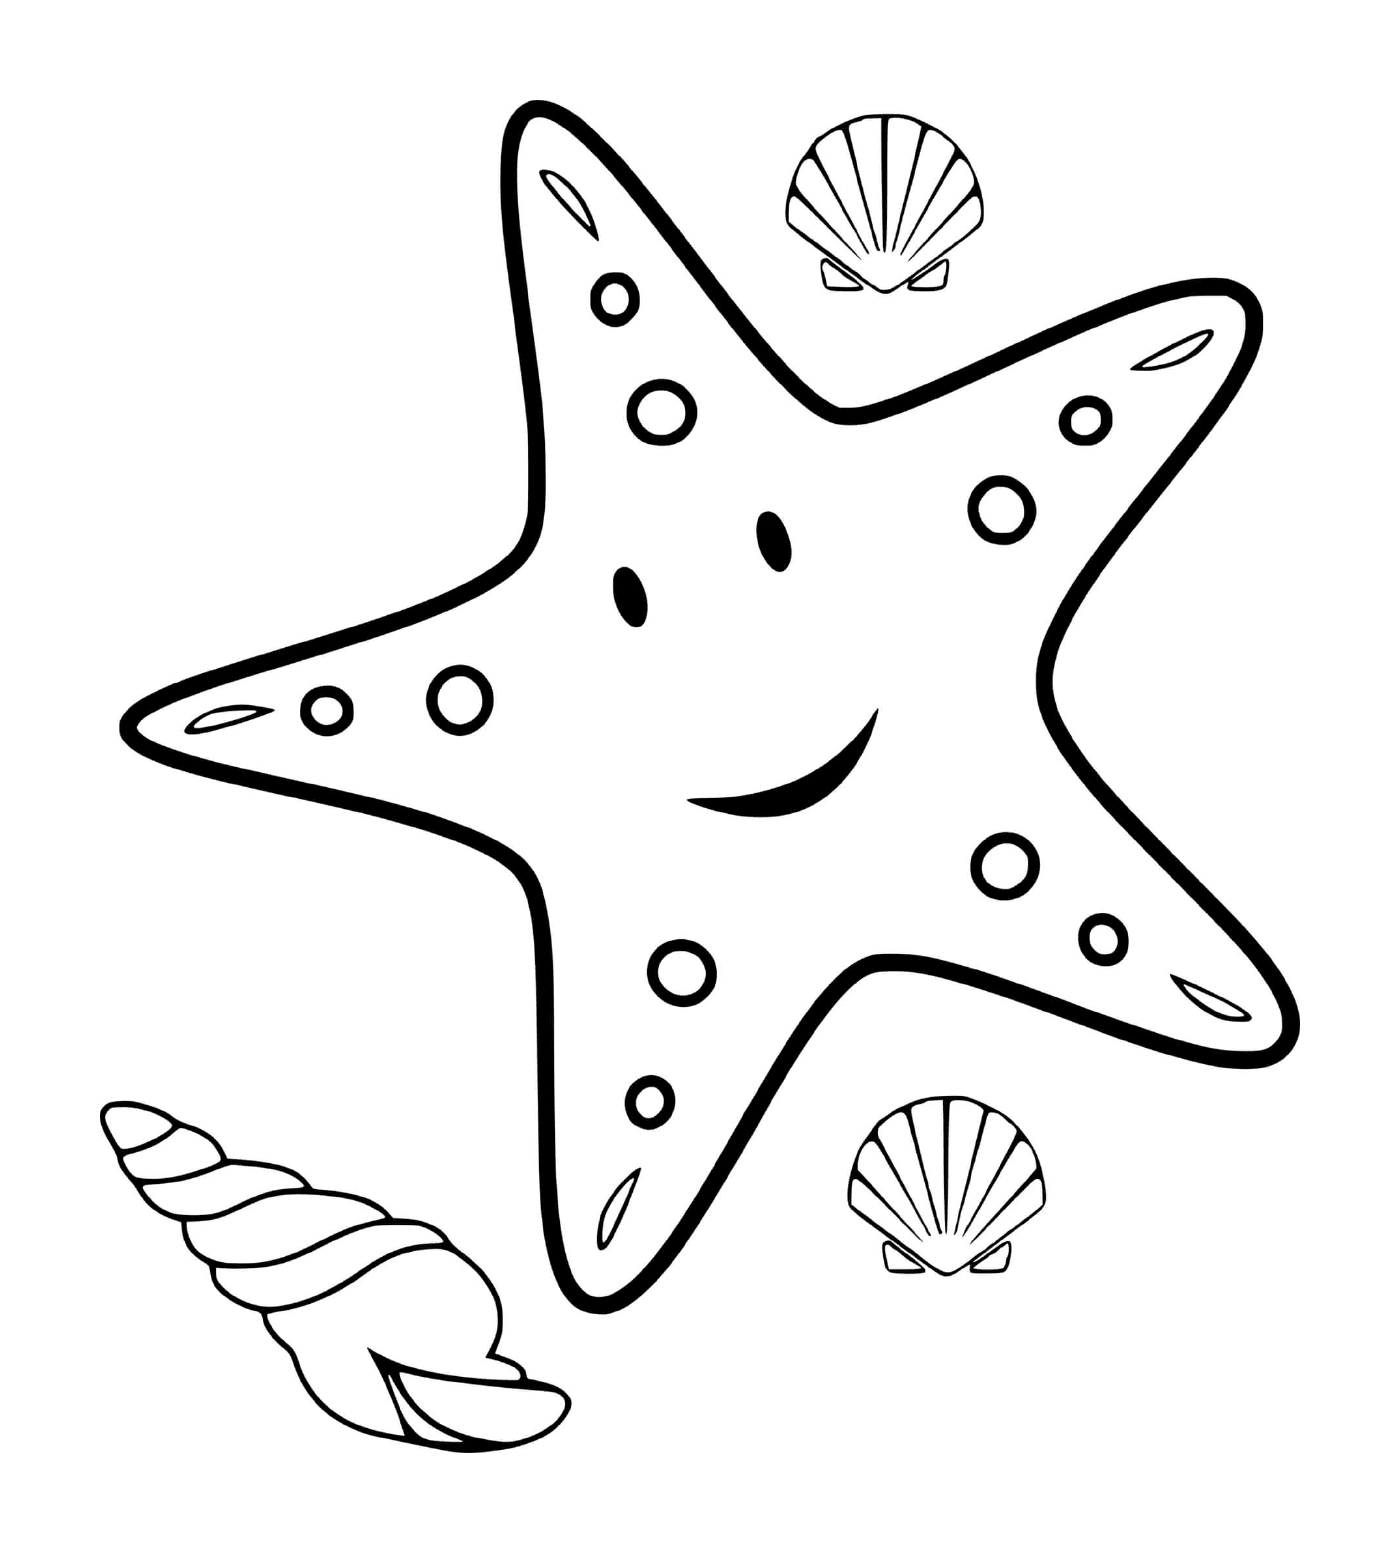  Estrela do mar colorida 